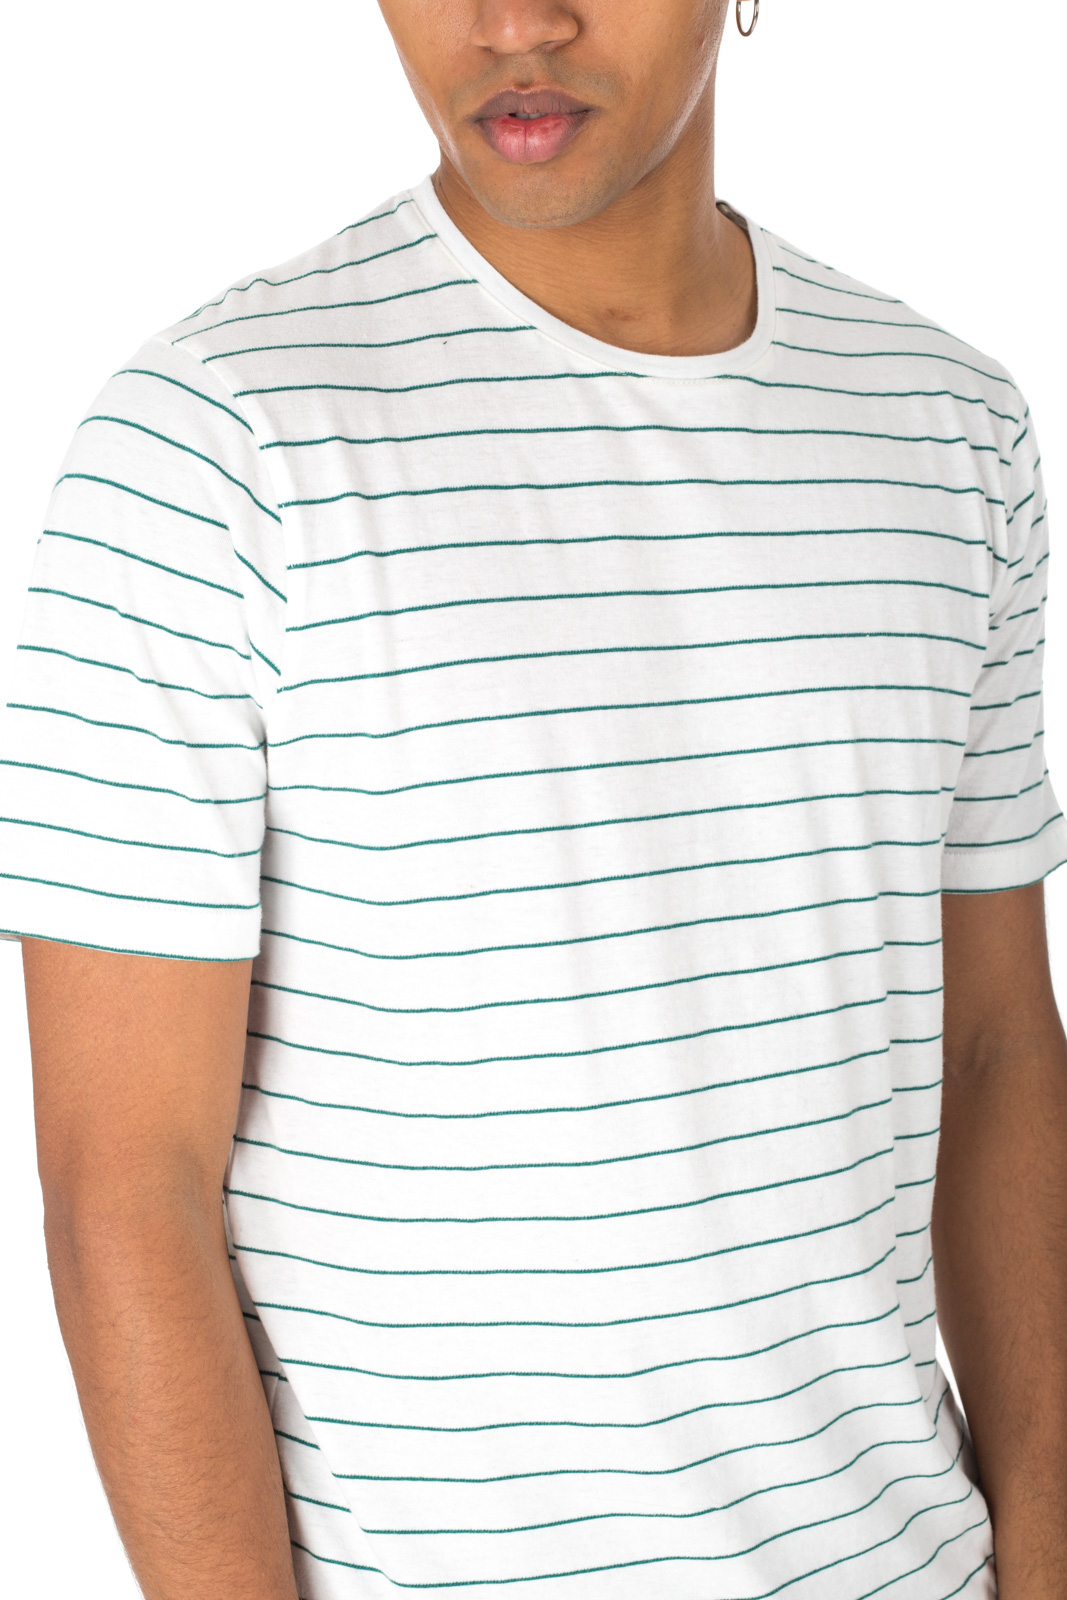 Minimum - Tatipu white / green striped T-shirt